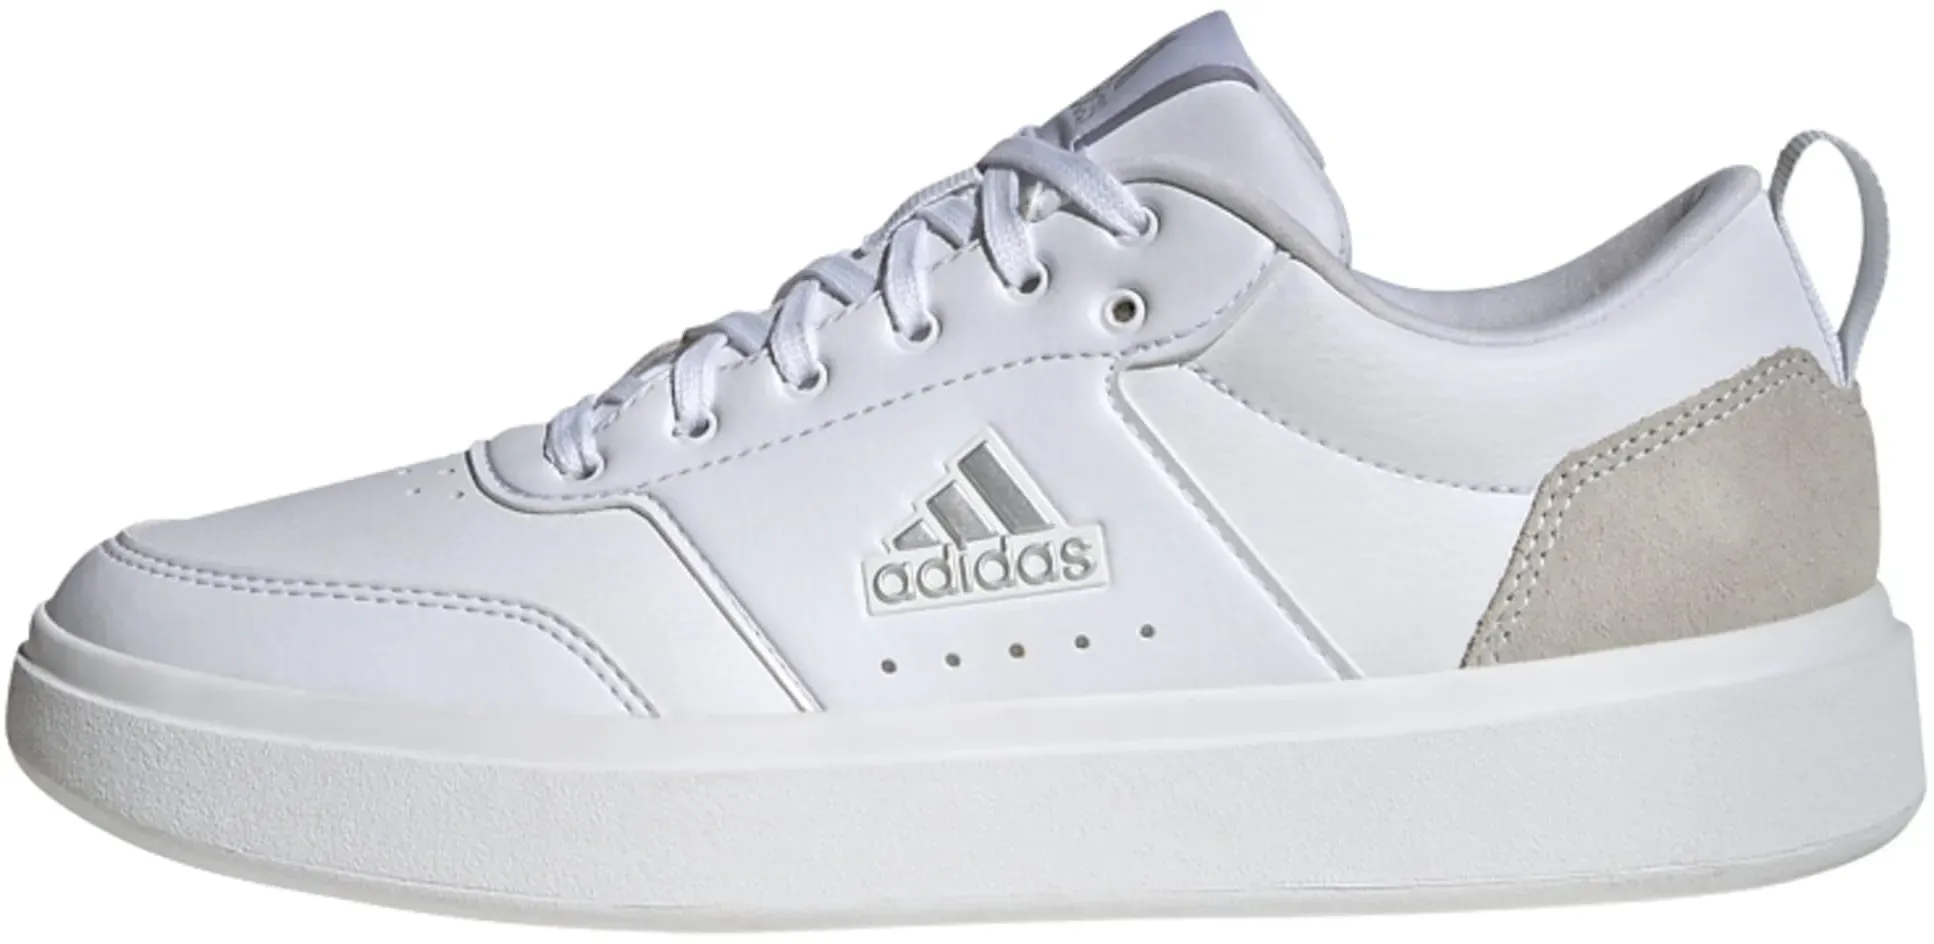 adidas Damen Park Street Shoes-Low (Non Football), FTWR White/FTWR White/Silver met, 37 1/3 EU